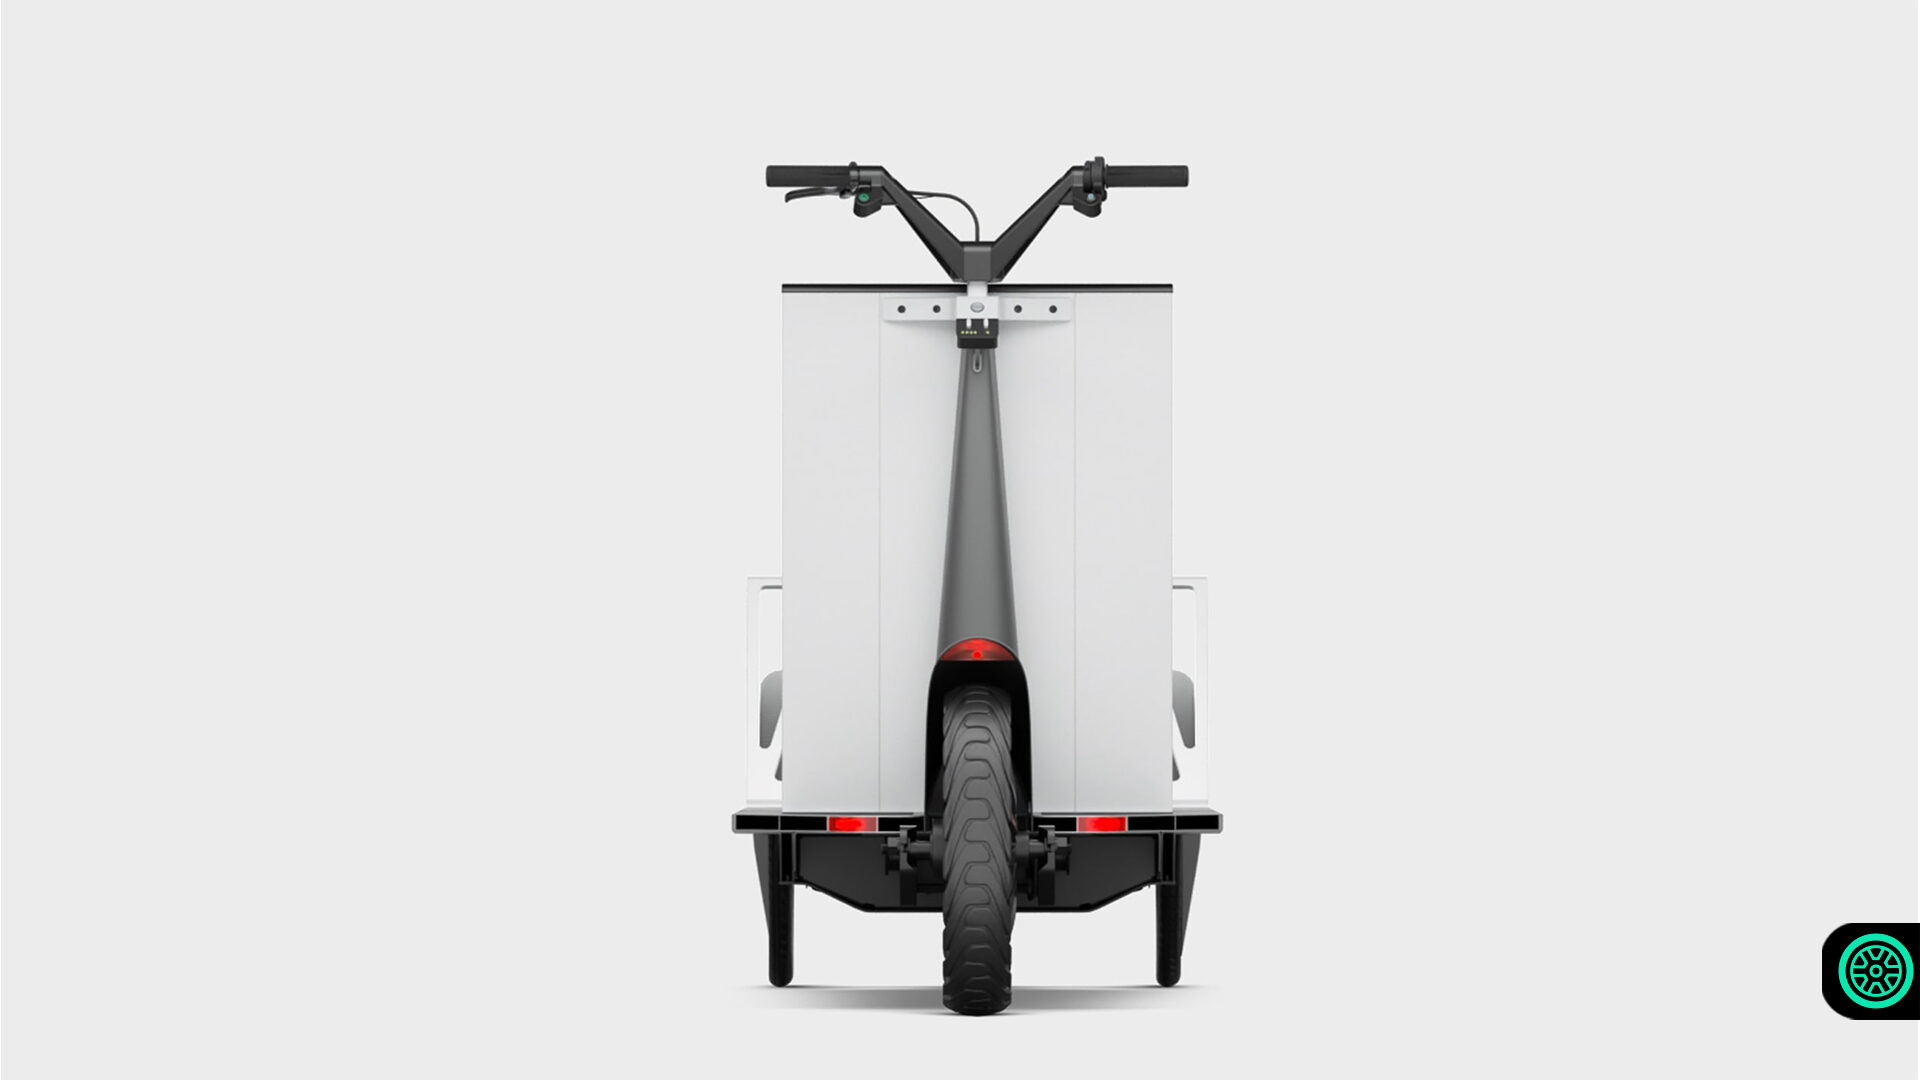 Polestar Re:Move teslimat scooter konsepti tanıtıldı! 13